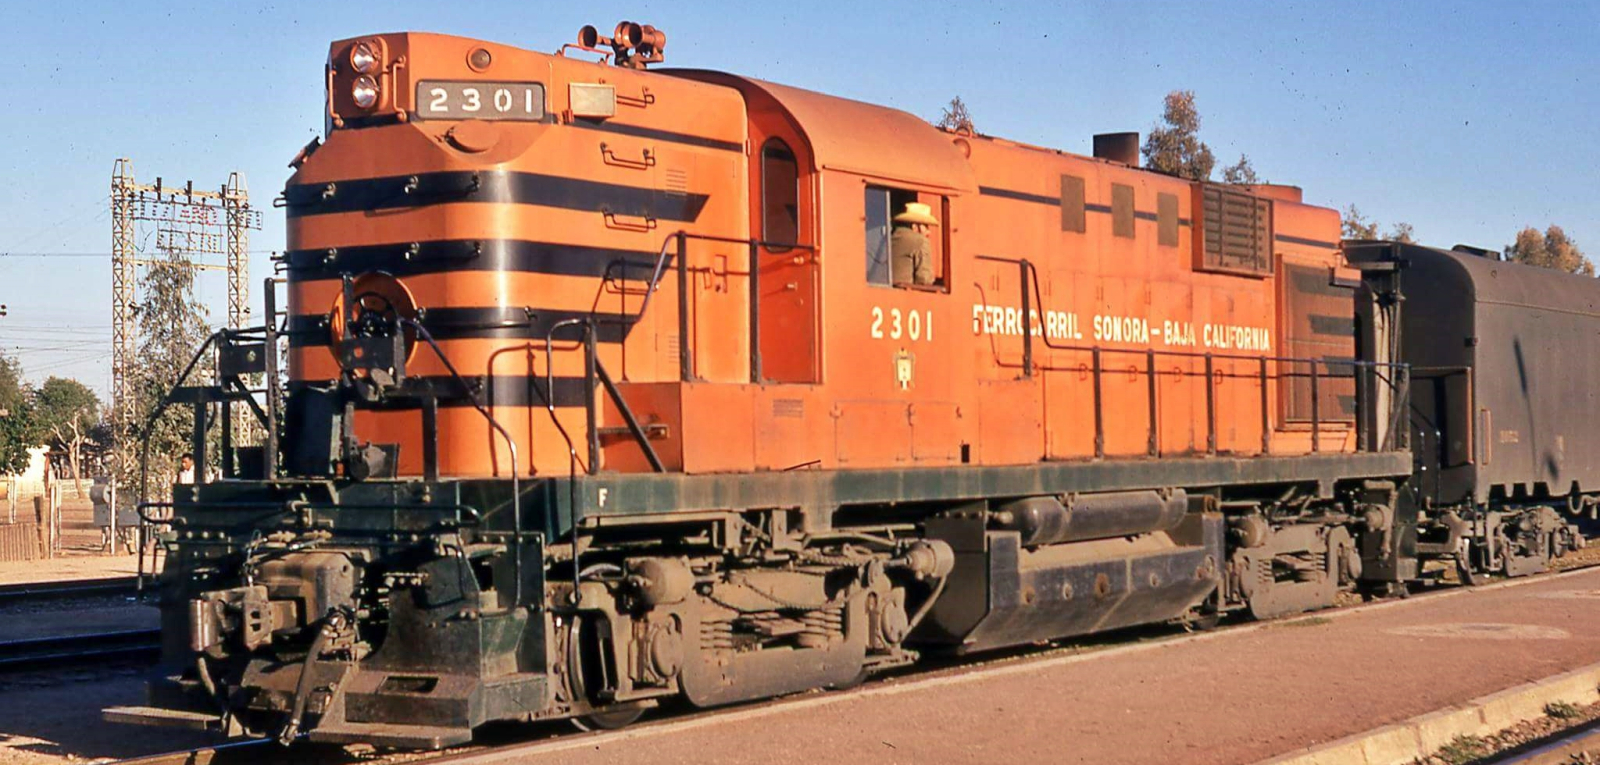 RS-11 No. 2301 of Ferrocarril Sonora-Baja California in September 2017 at Benjamín Hill